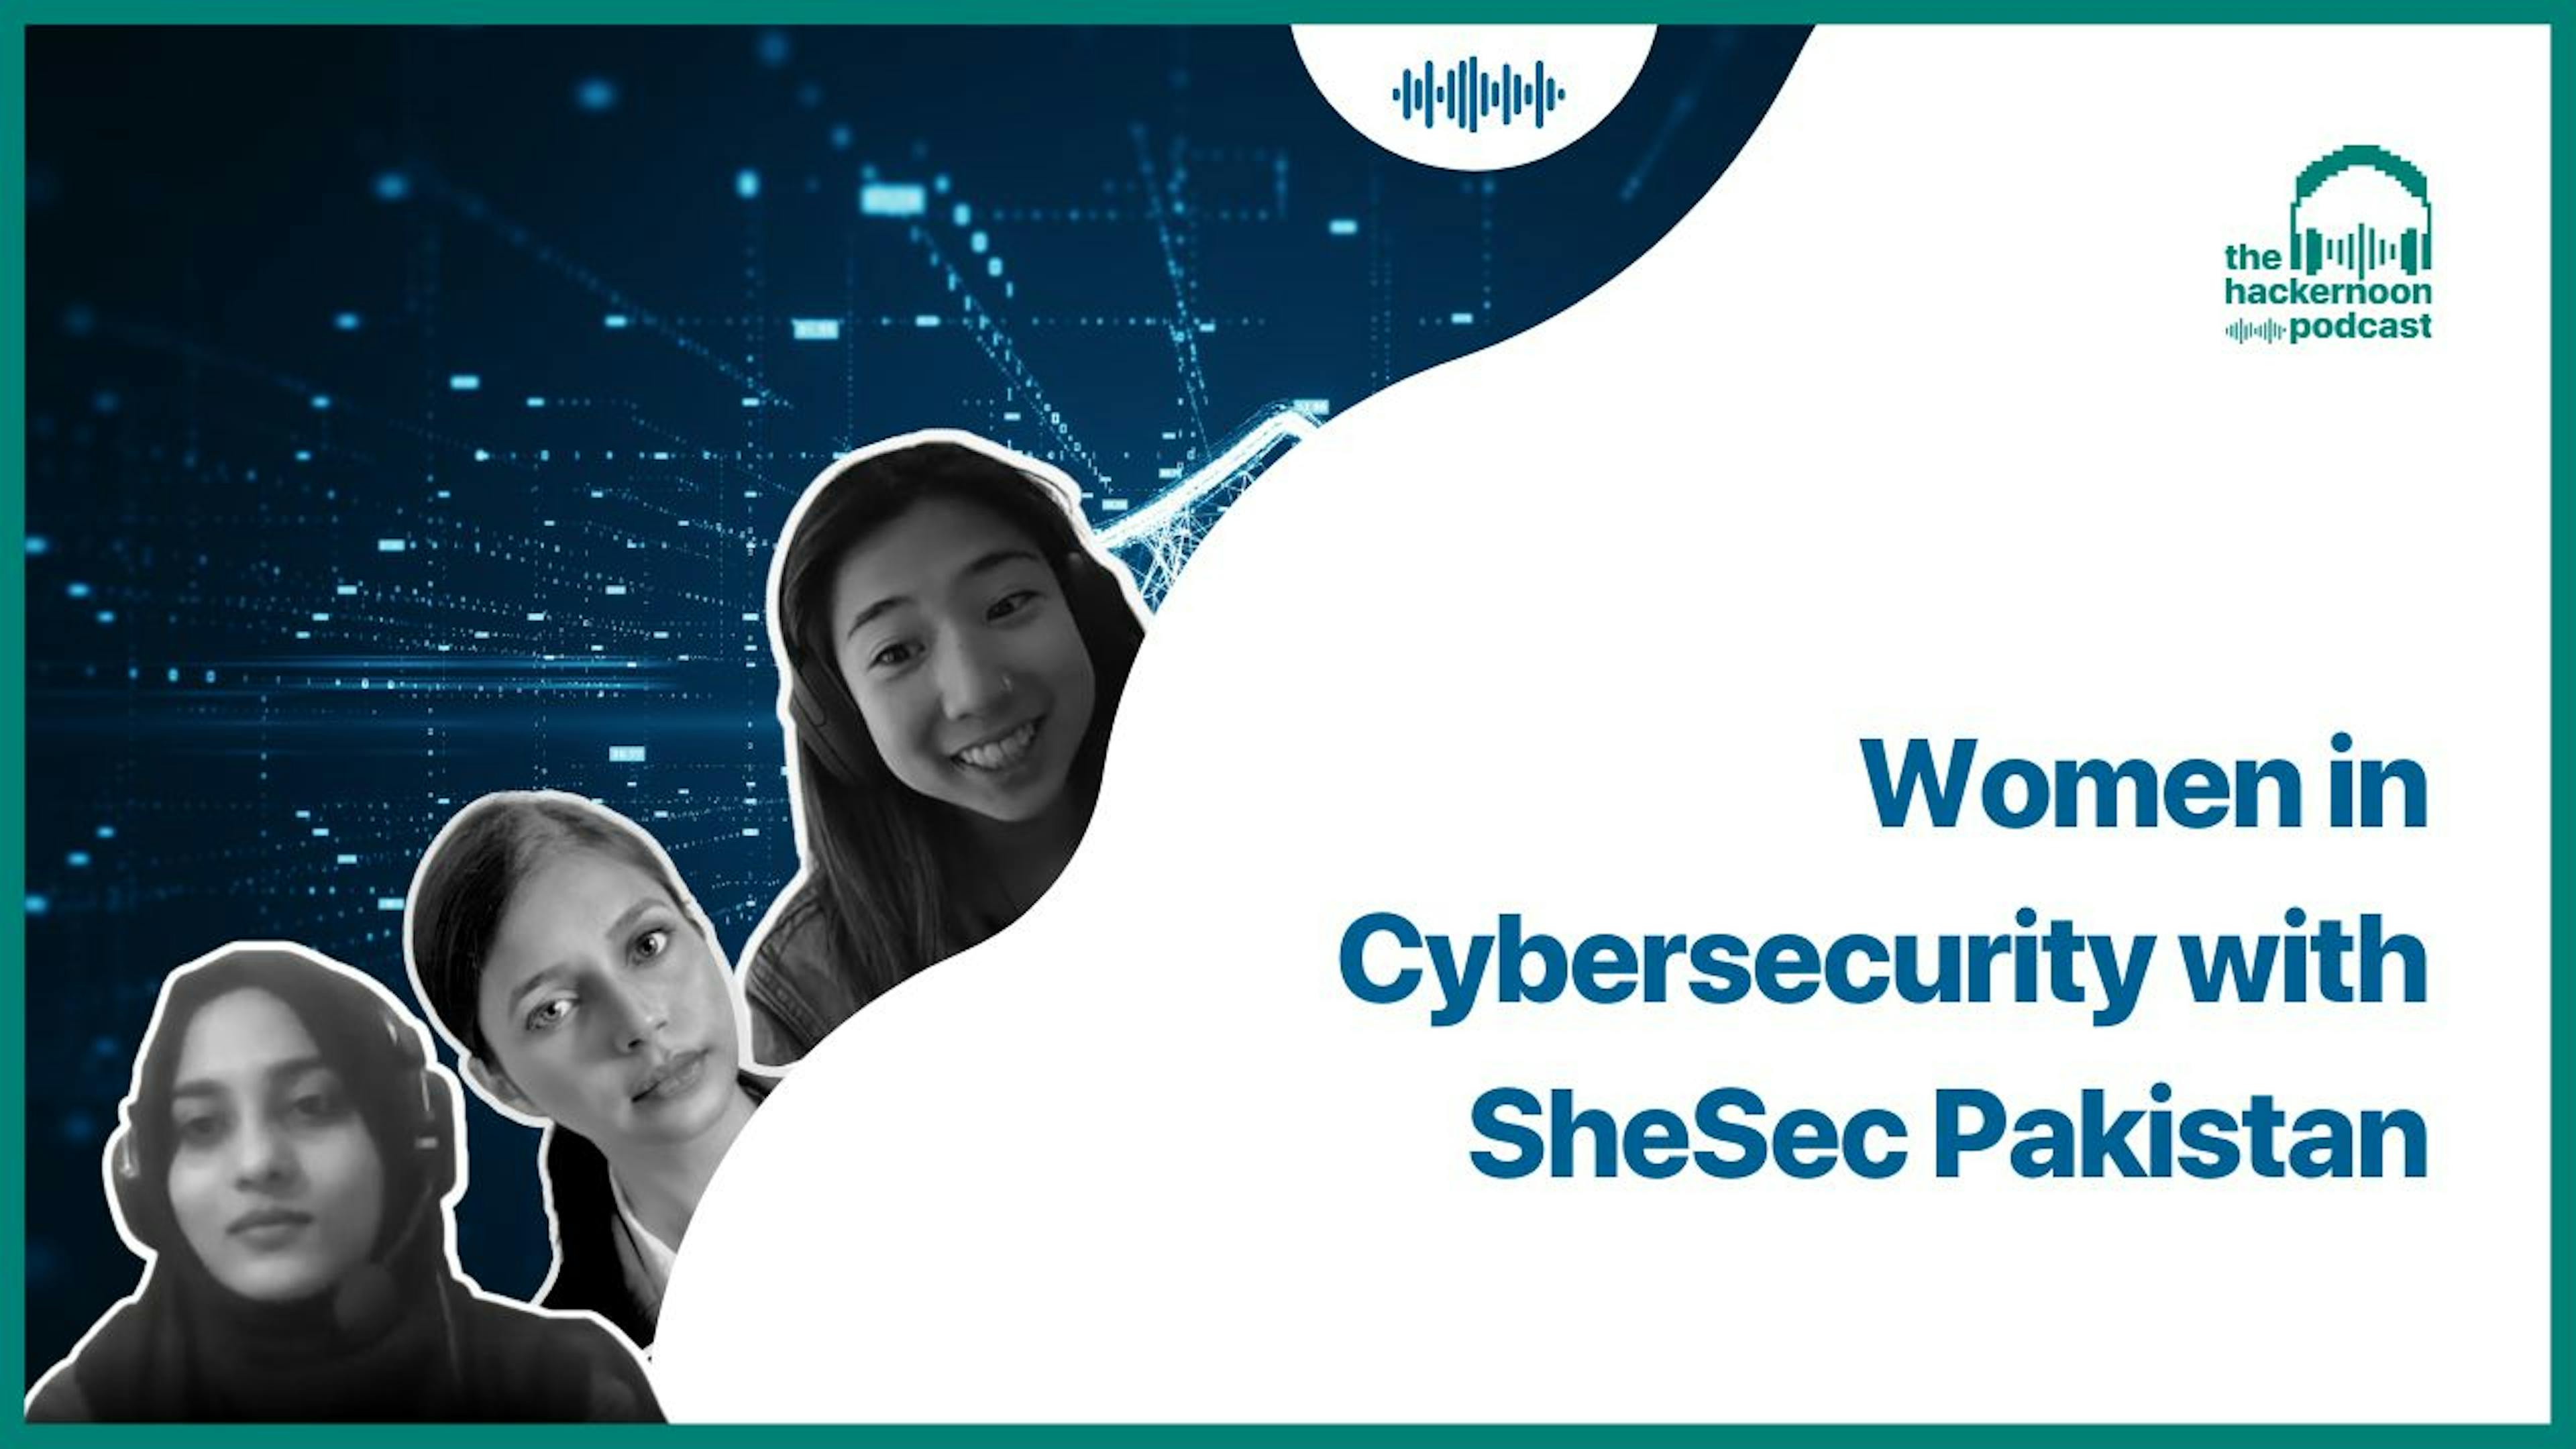 featured image - Phụ nữ an ninh mạng với SheSec Pakistan trên The HackerNoon Podcast